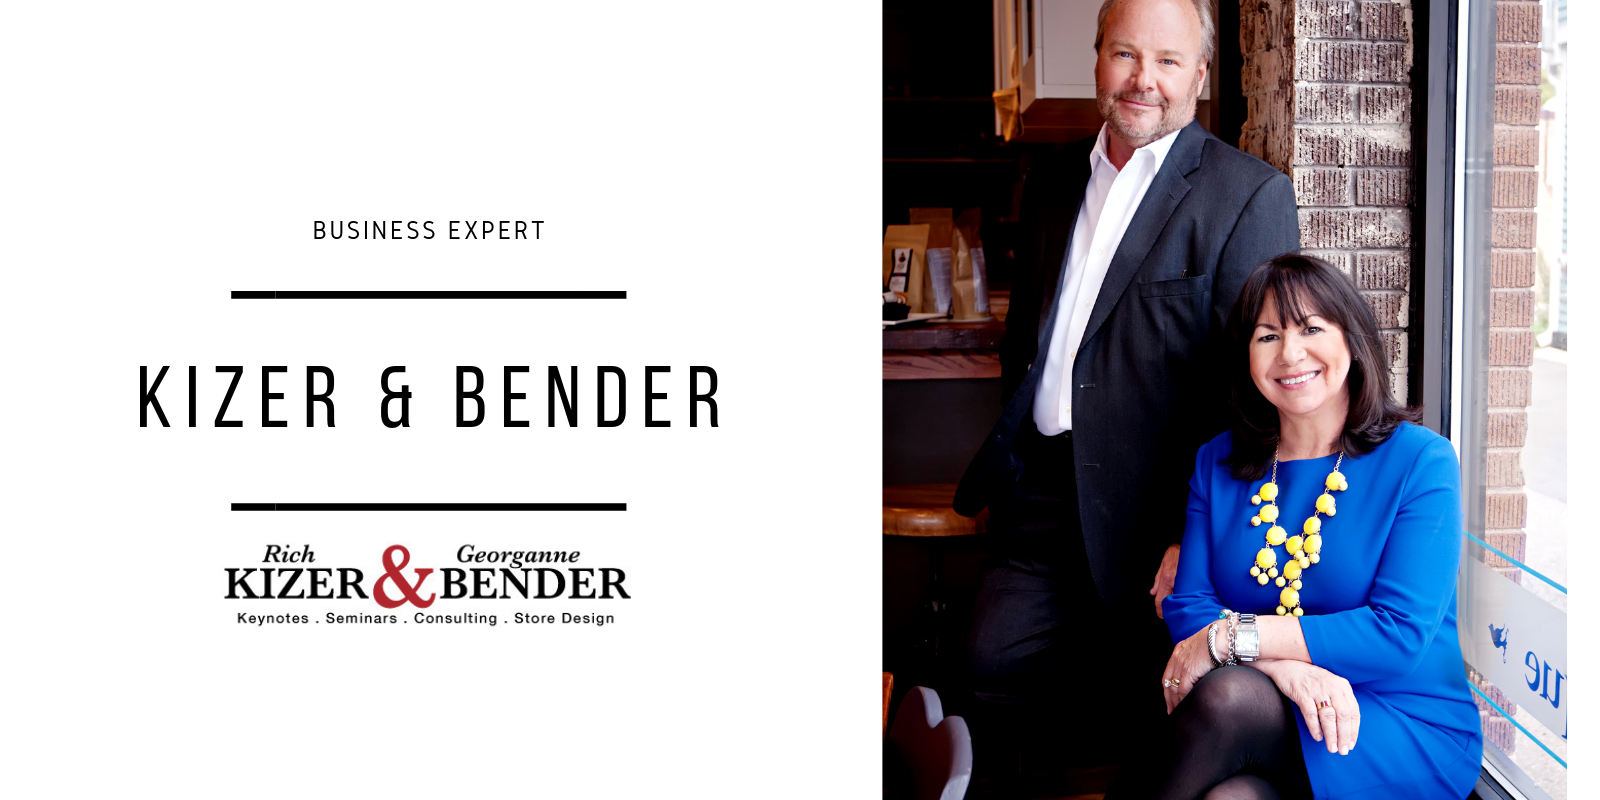 American Quilt Retailer Business Expert Kizer & Bender